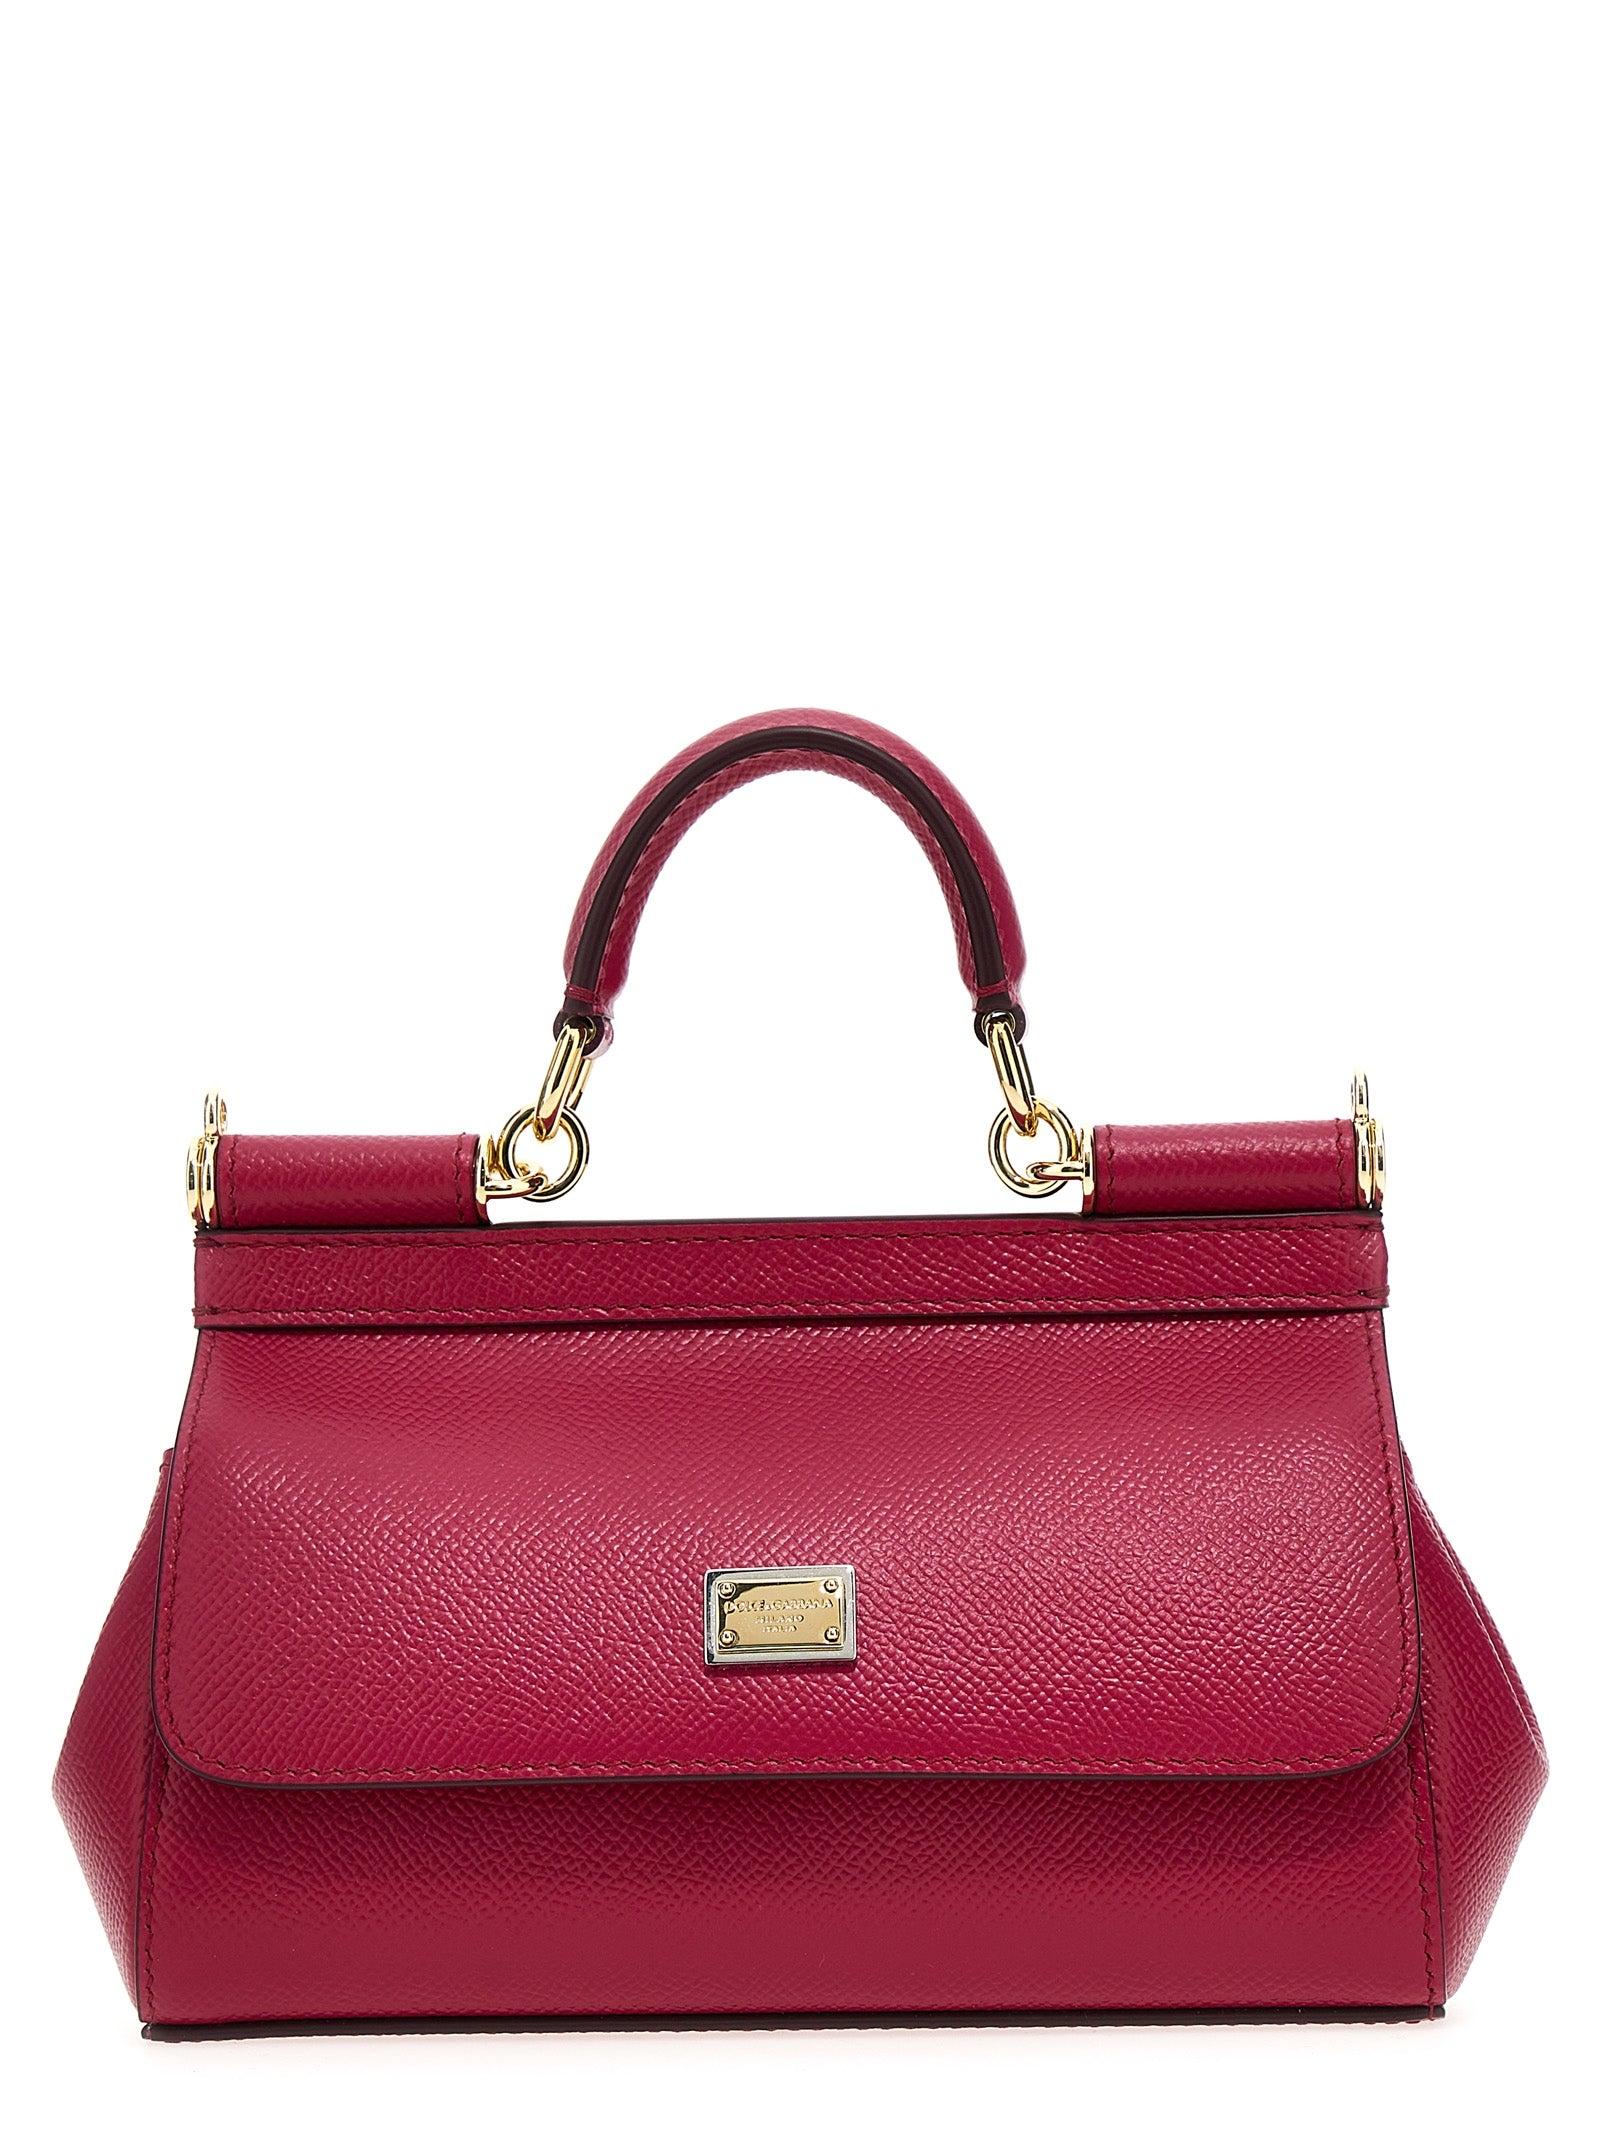 Dolce & Gabbana Sicily Small Handbag Hand Bags Fuchsia in Red